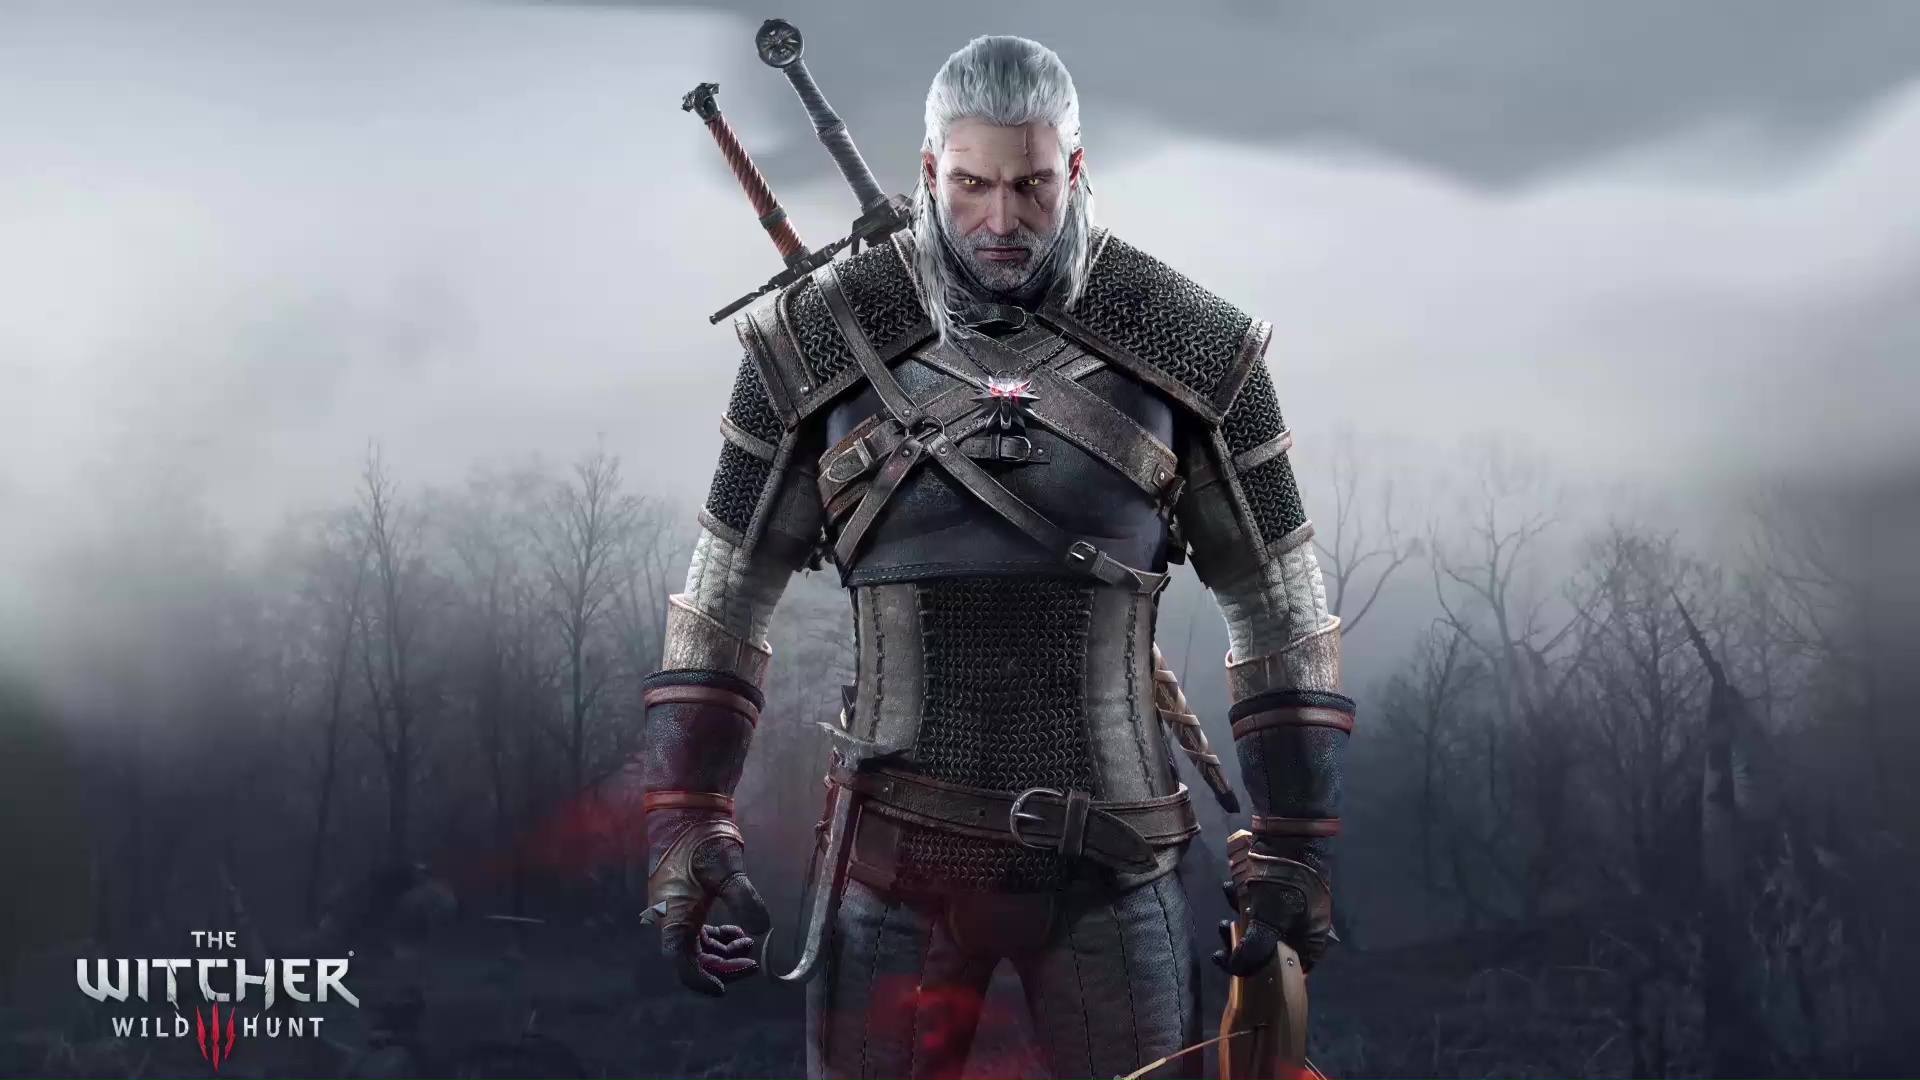 The Witcher : Geralt of Rivia 4K wallpaper download